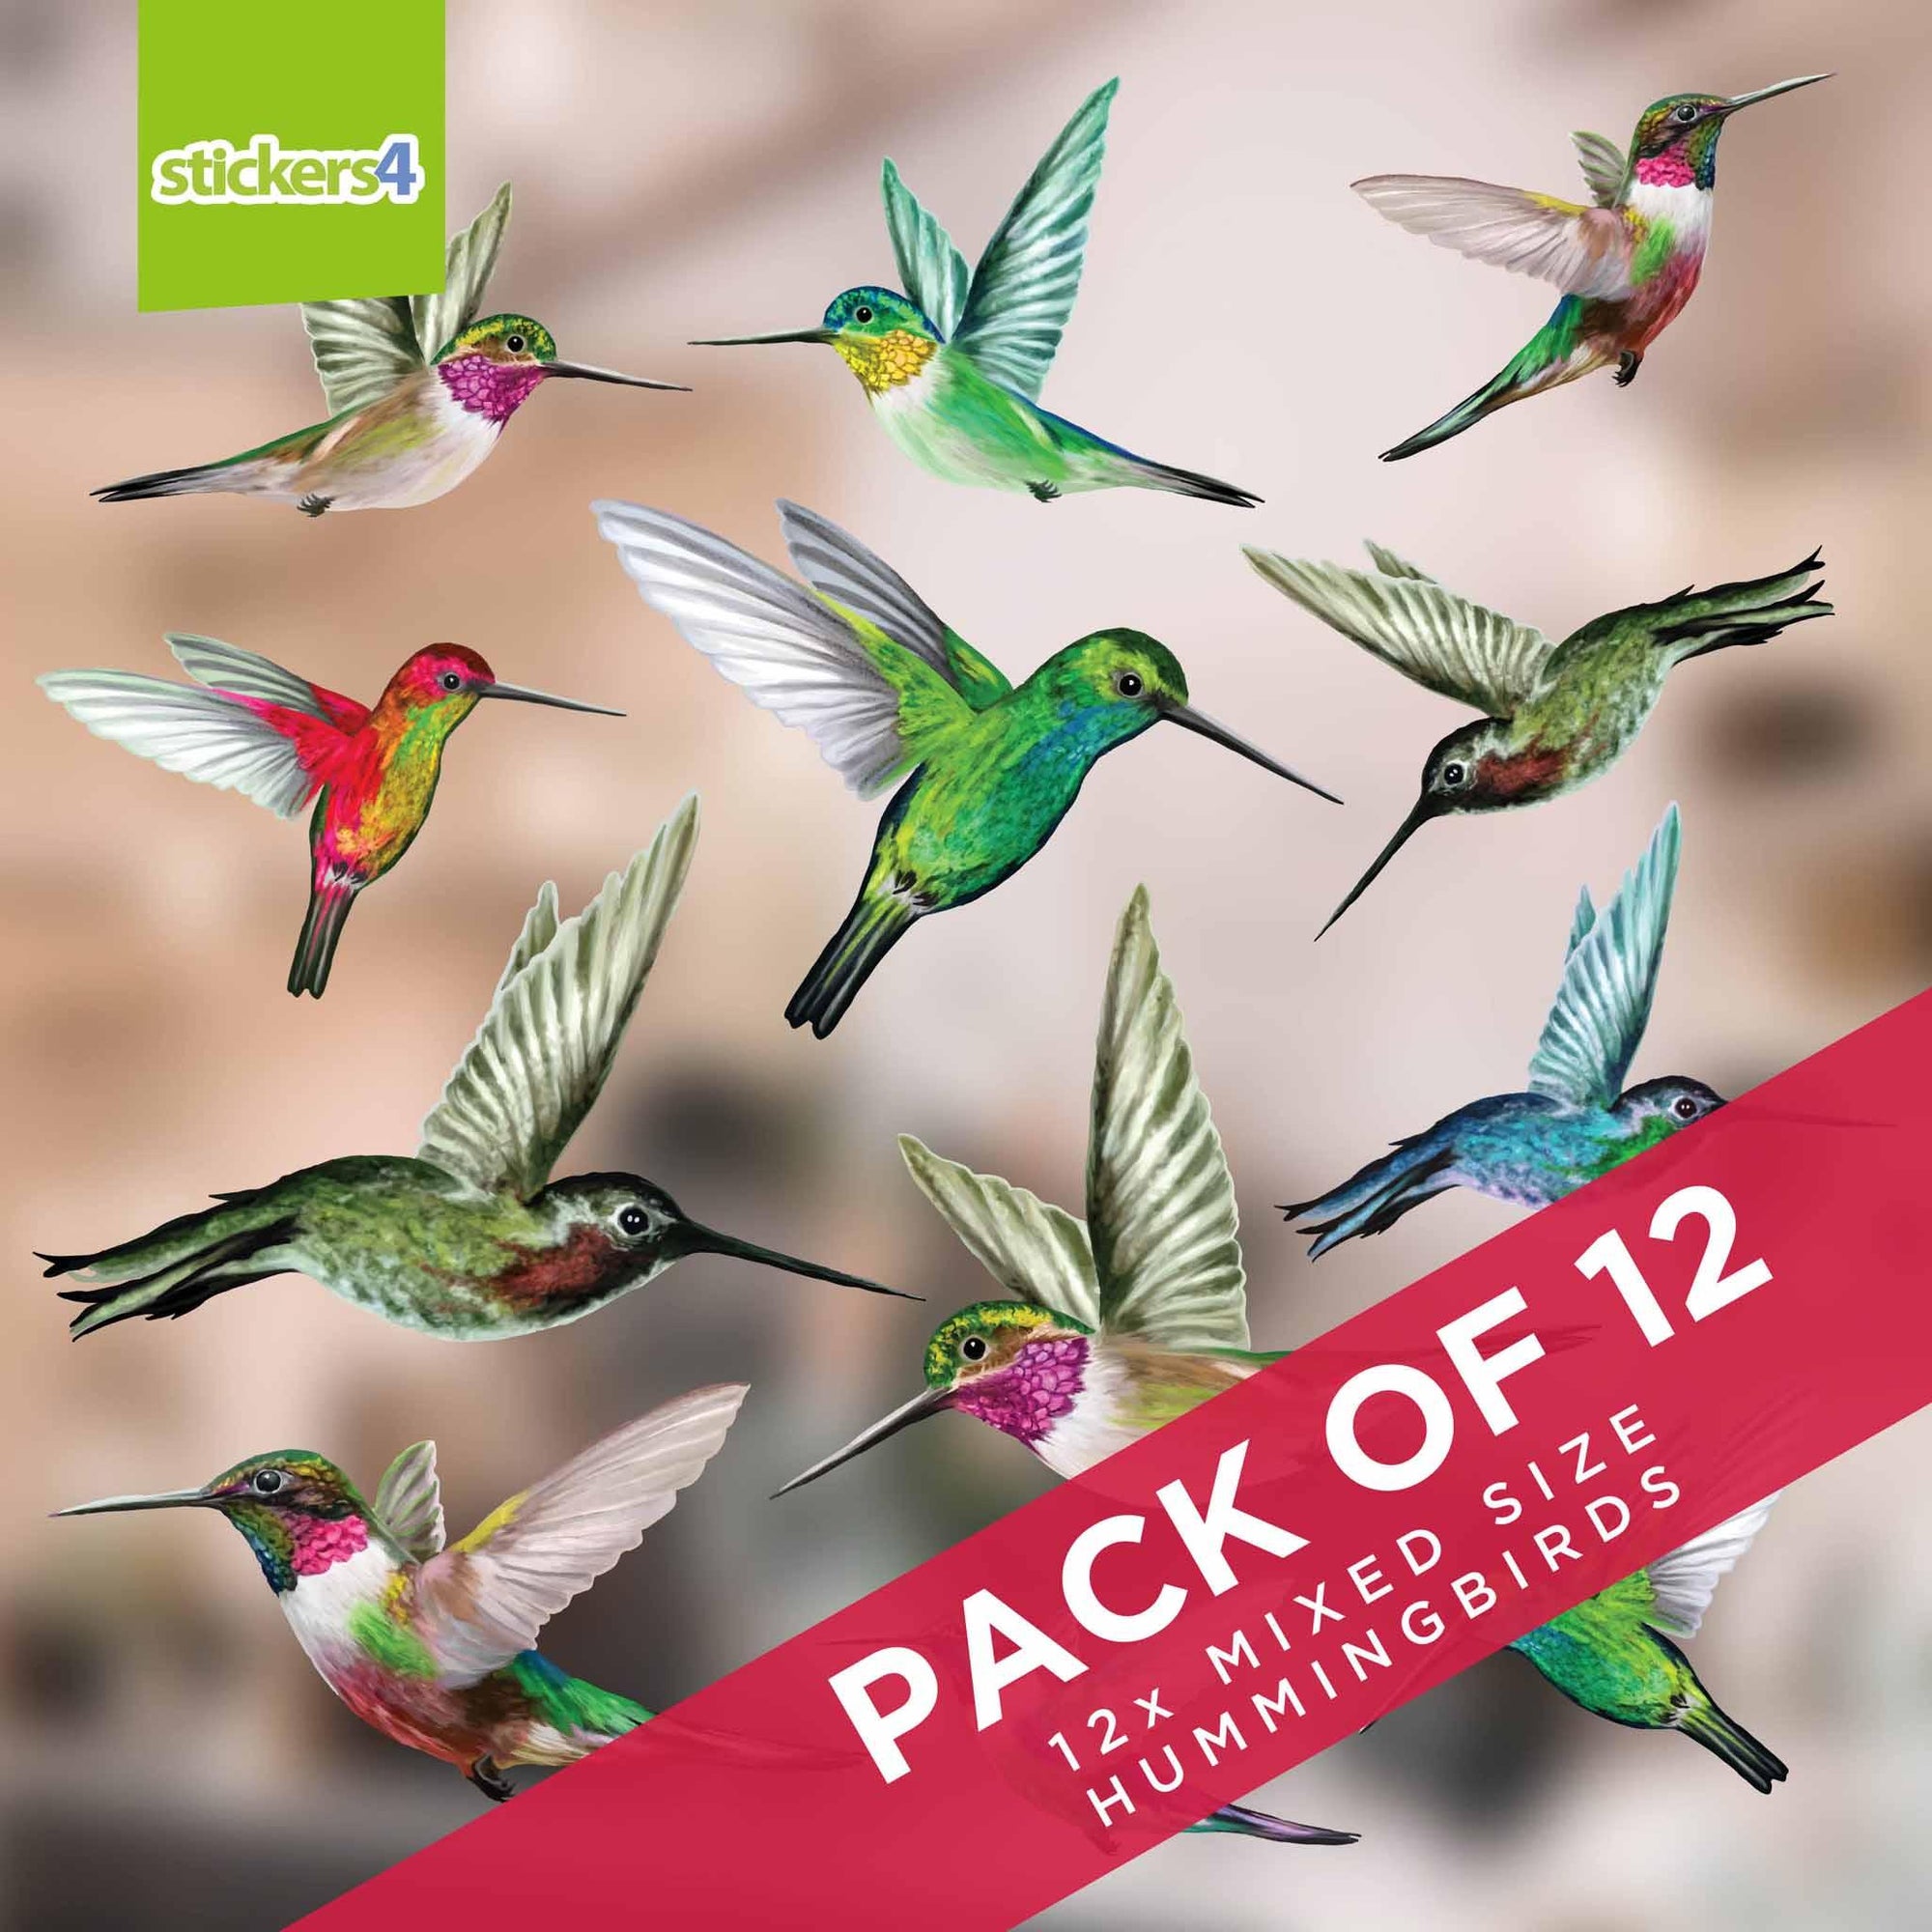 Set of 12 Mixed Size Humming Bird Window Stickers Decorative Bird Strike Prevention